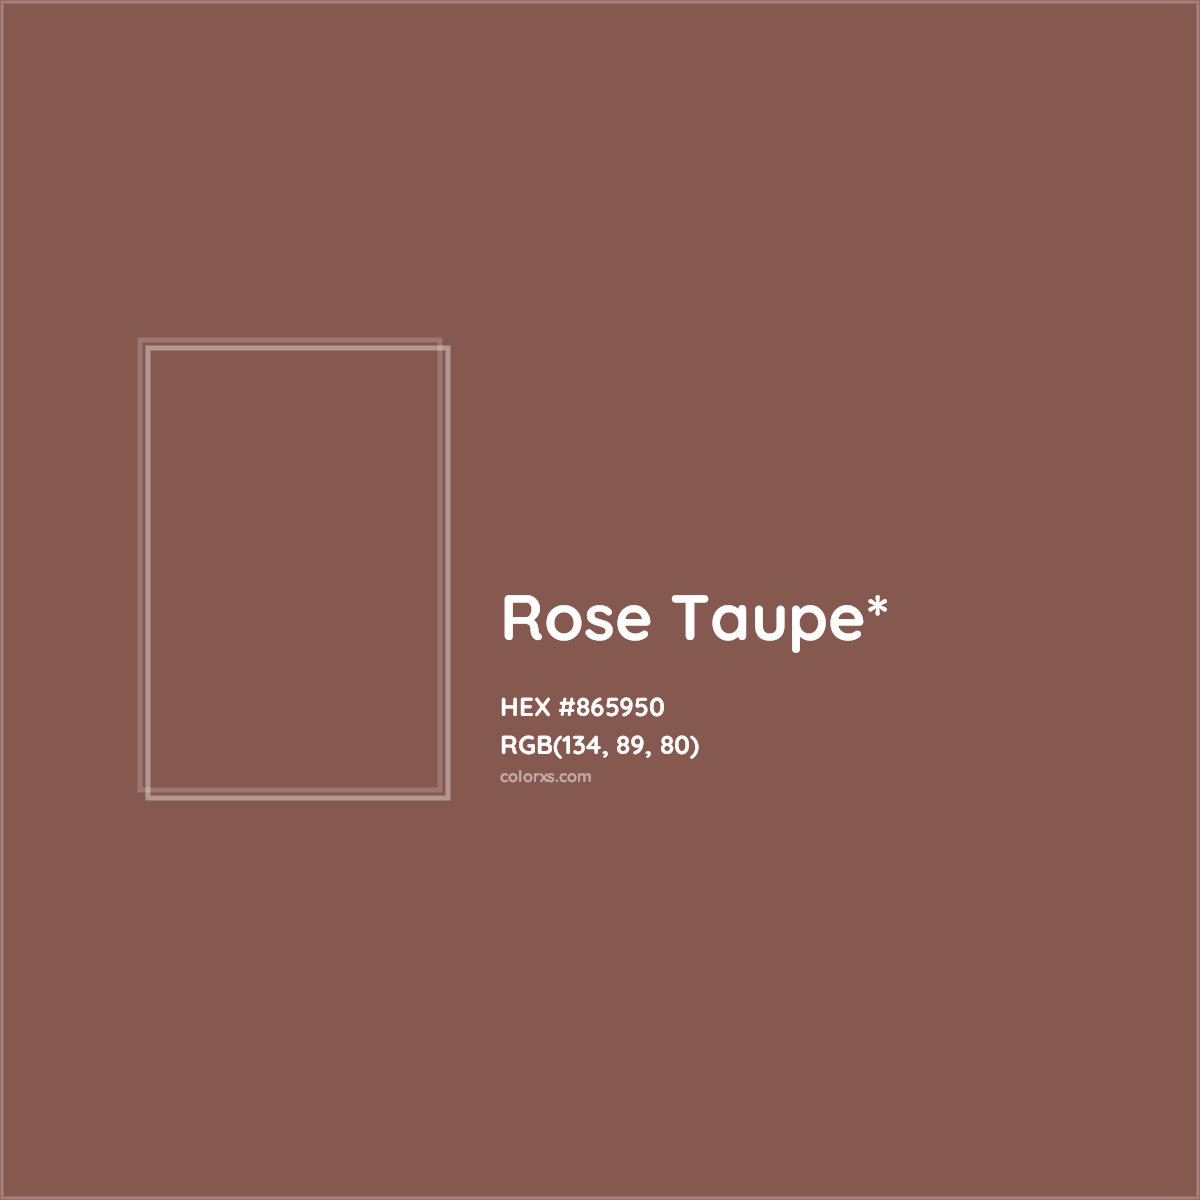 Rose Taupe information, Hsl, Rgb